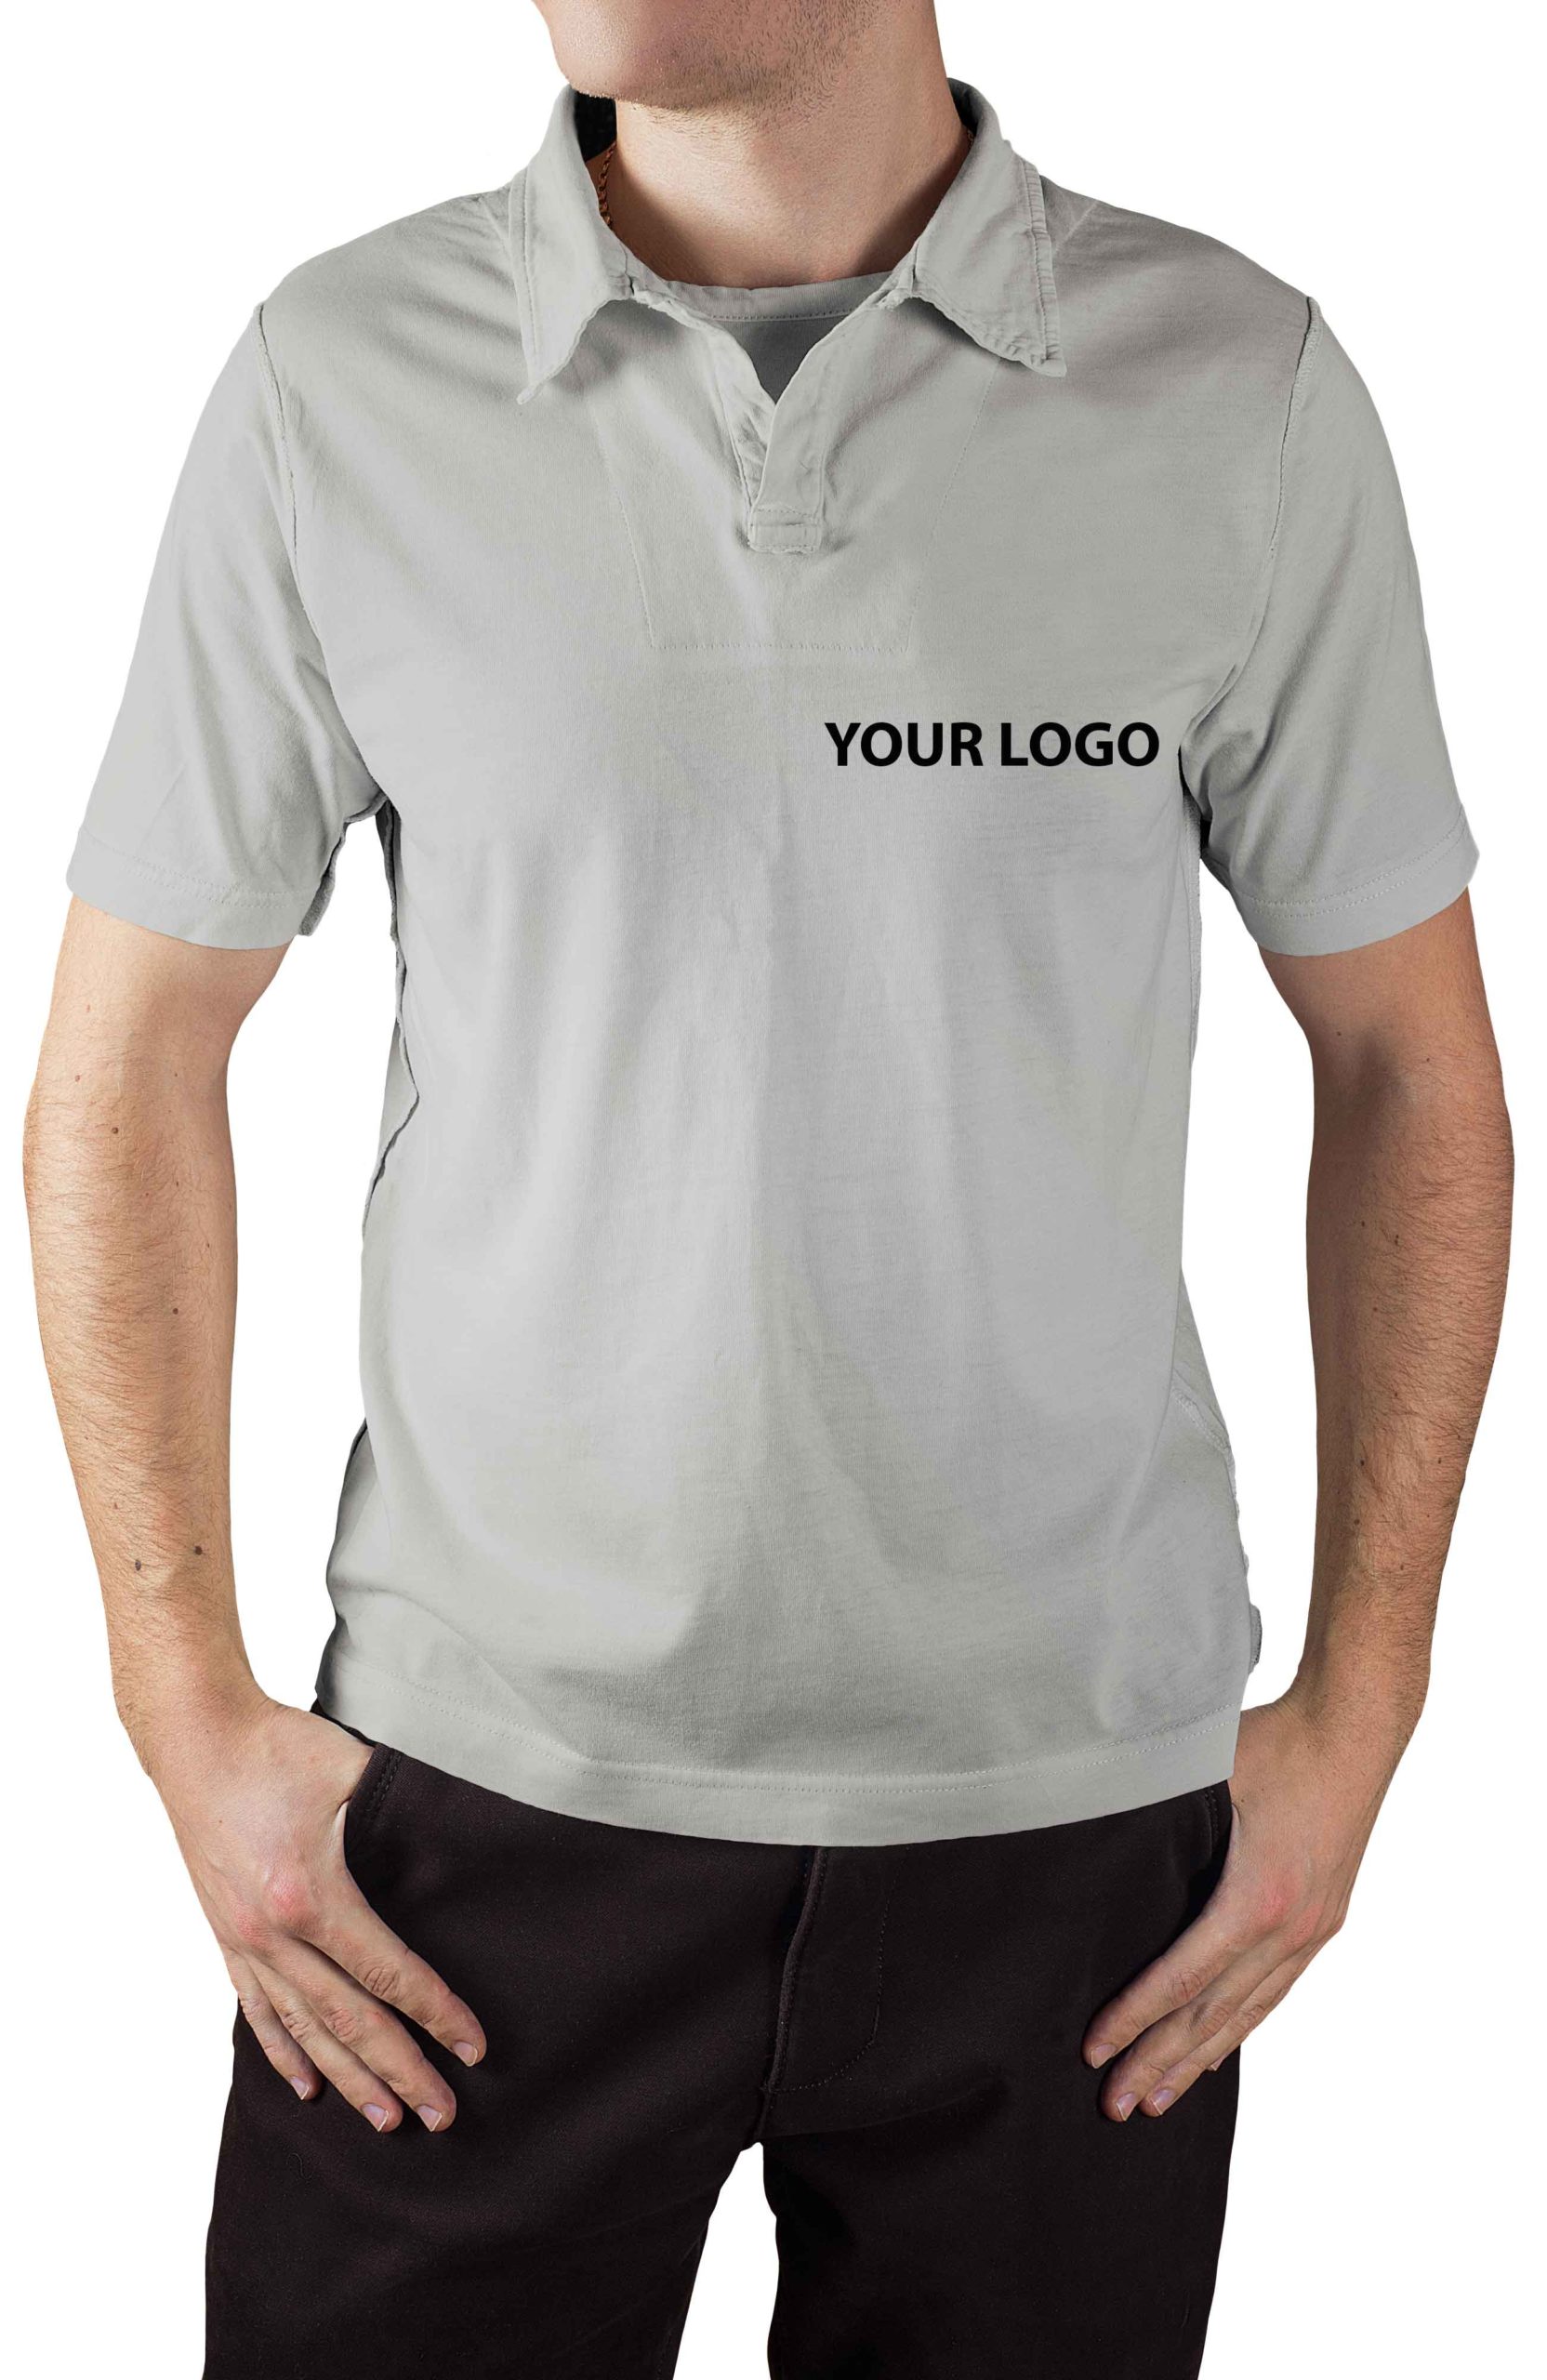 corporate-uniform-t-shirt